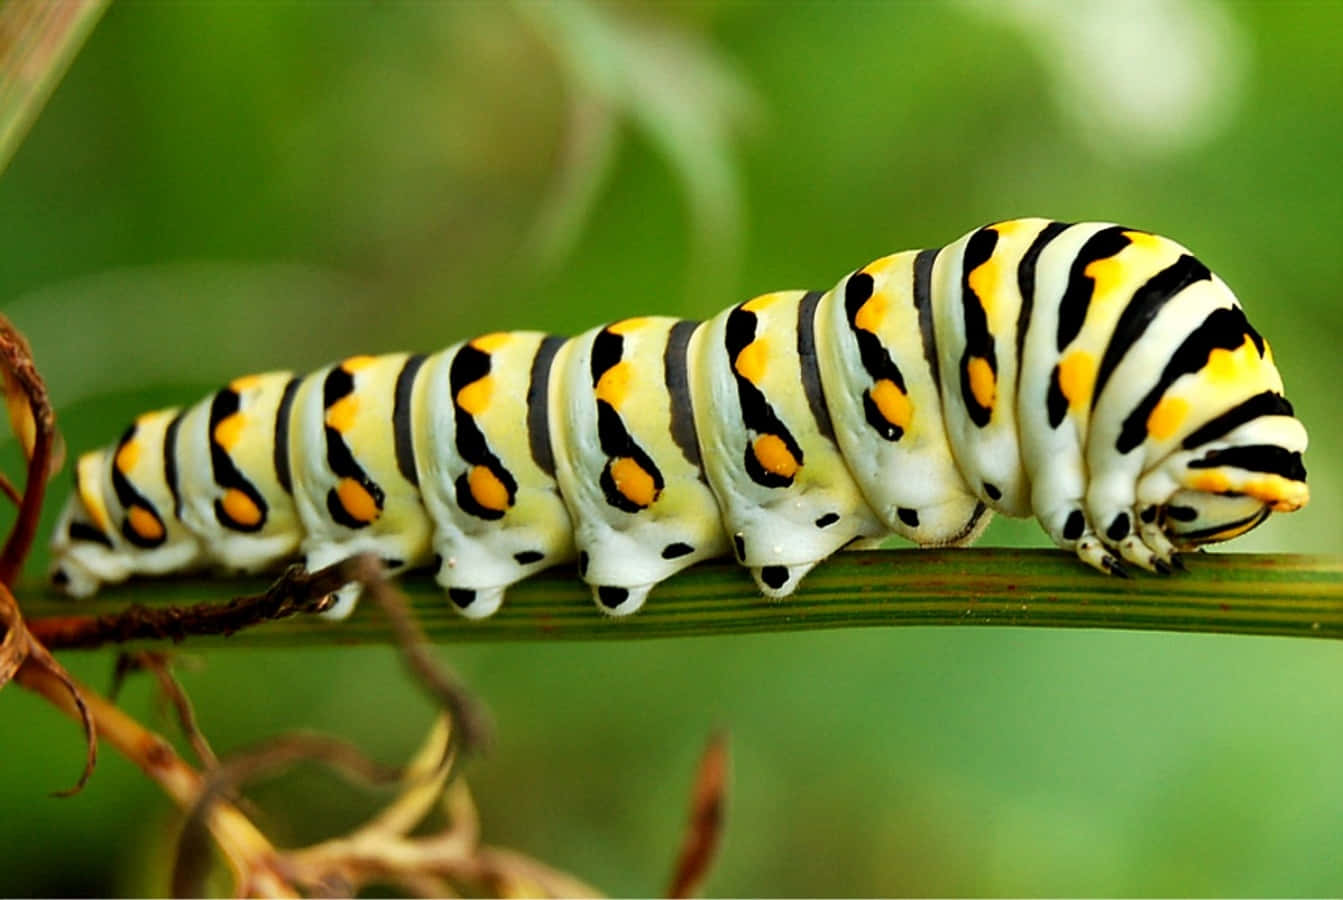 "Butterfly's beginnings: a beautiful caterpillar making its transformation"